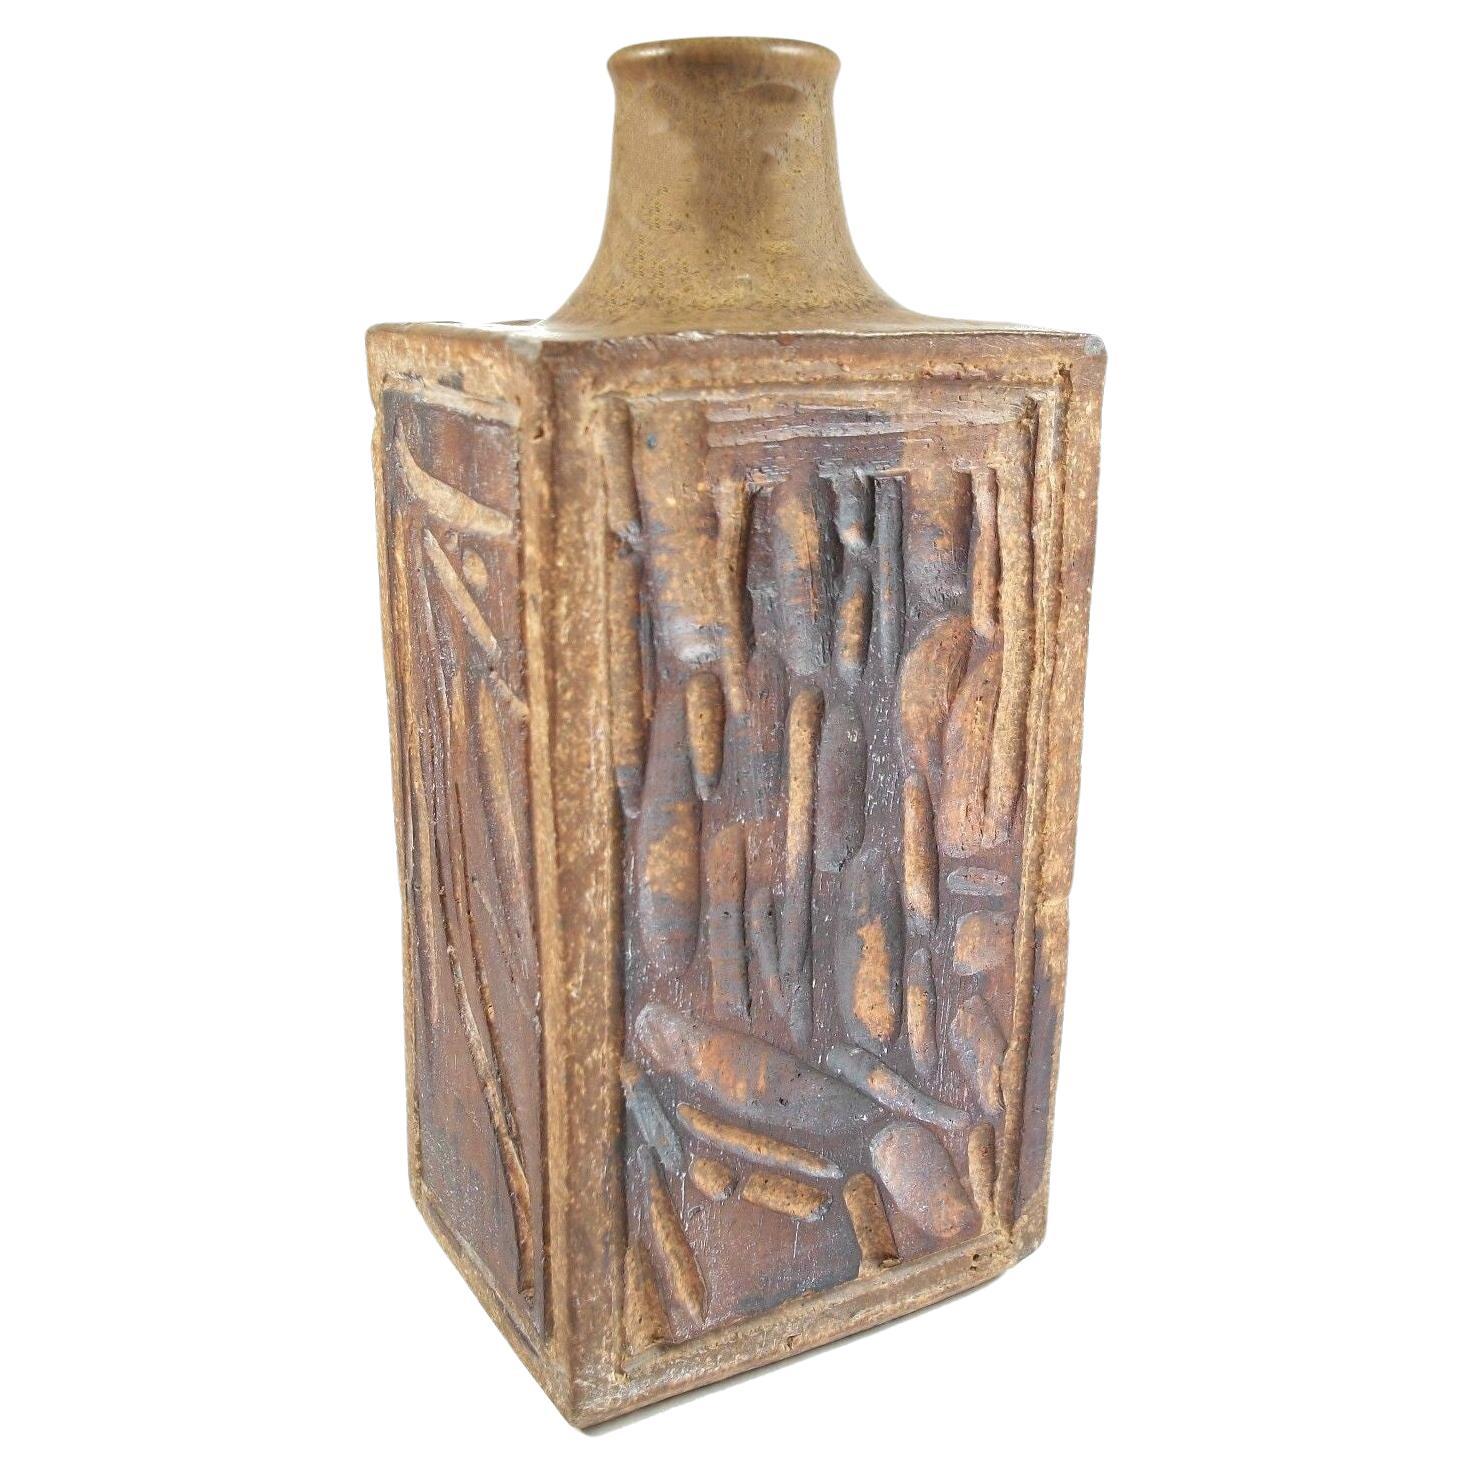 VILT - Cut-Sided & Glazed Stoneware Studio Pottery Vase - Signed - 20th Century For Sale